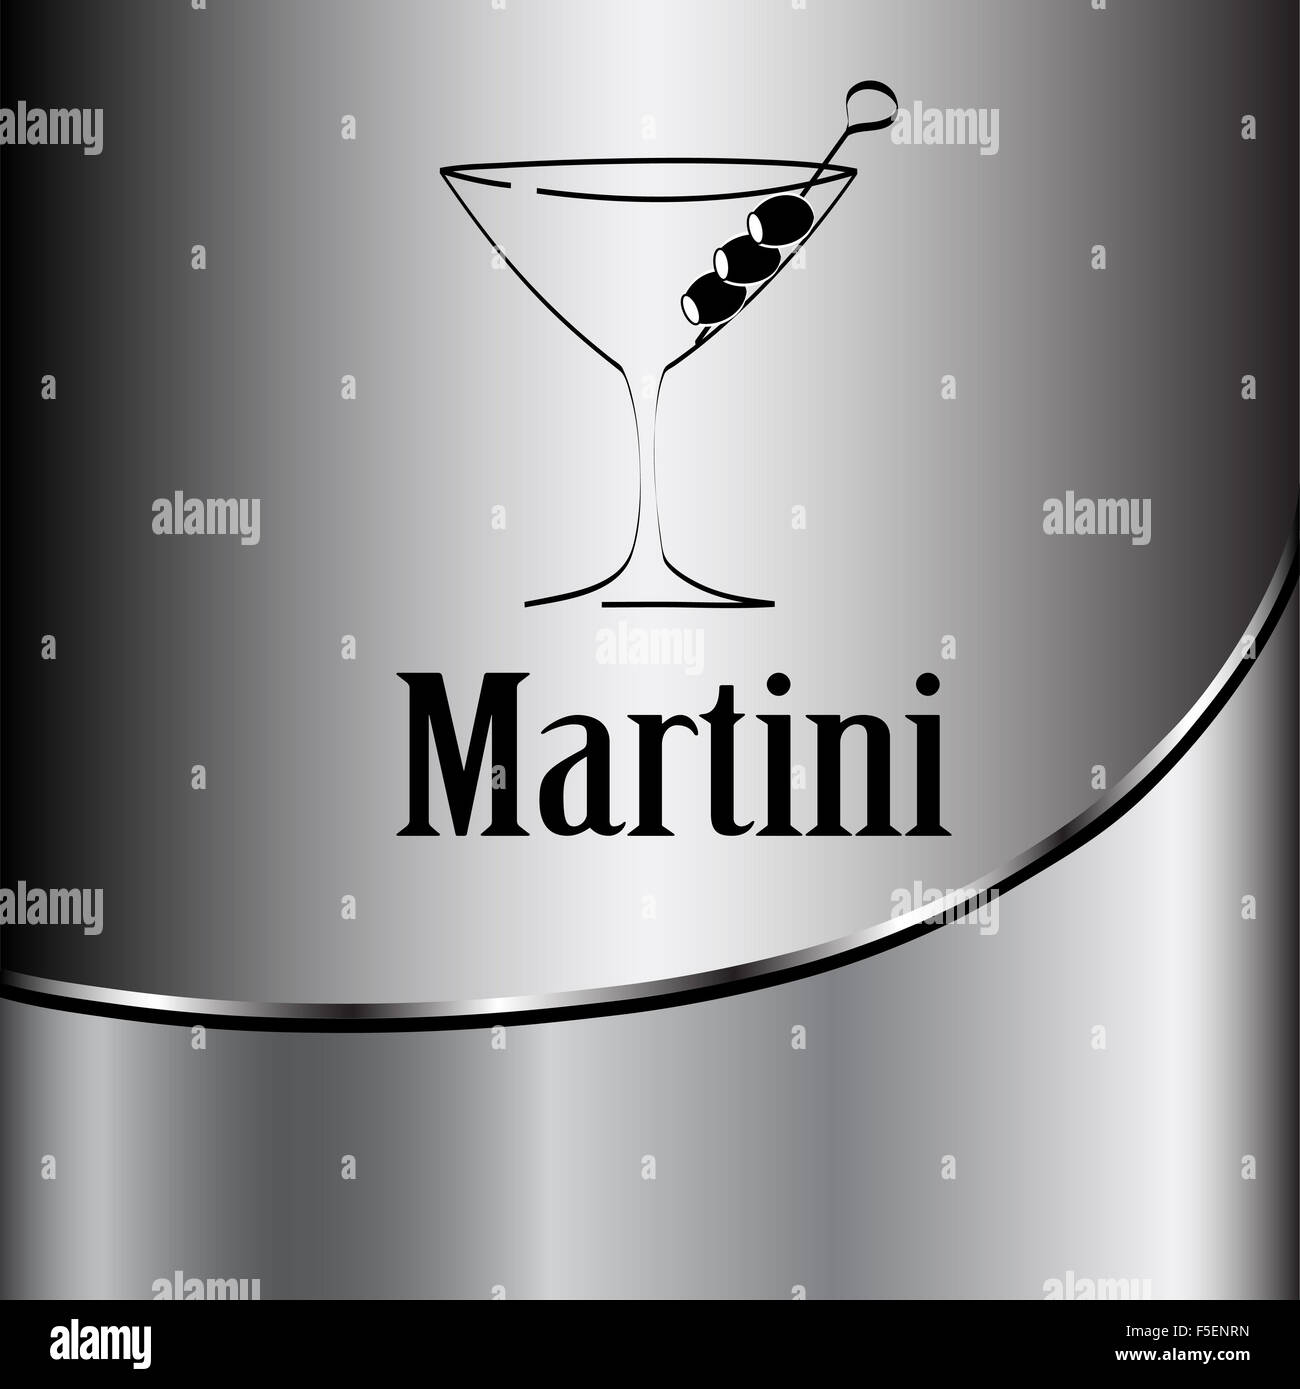 Martini glass design menu background. Vector Stock Photo